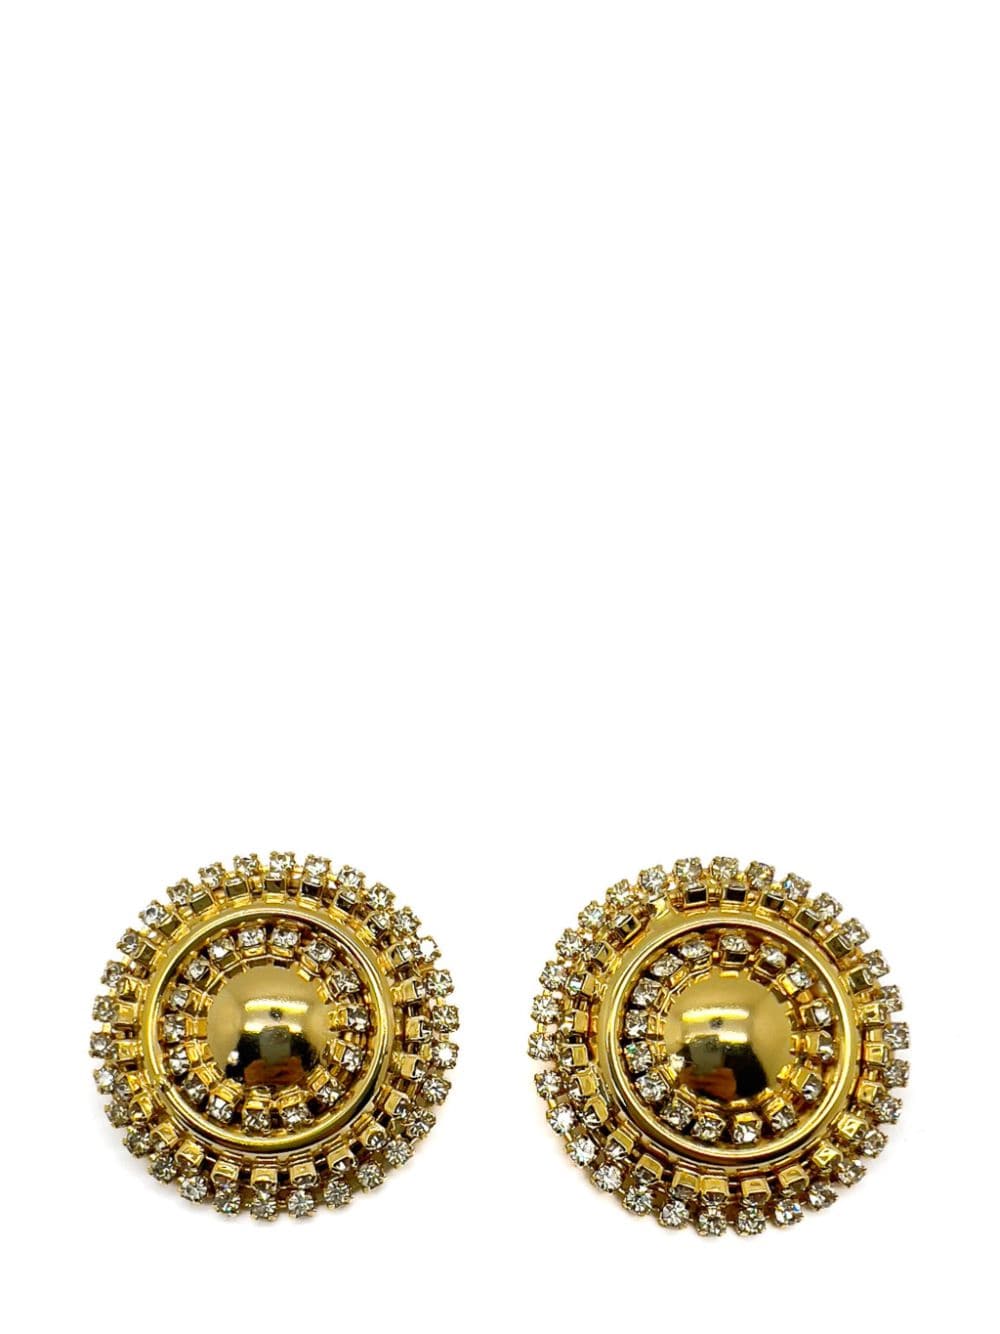 Vintage Gold &amp; Crystal Statement Bullseye Earrings 1980s